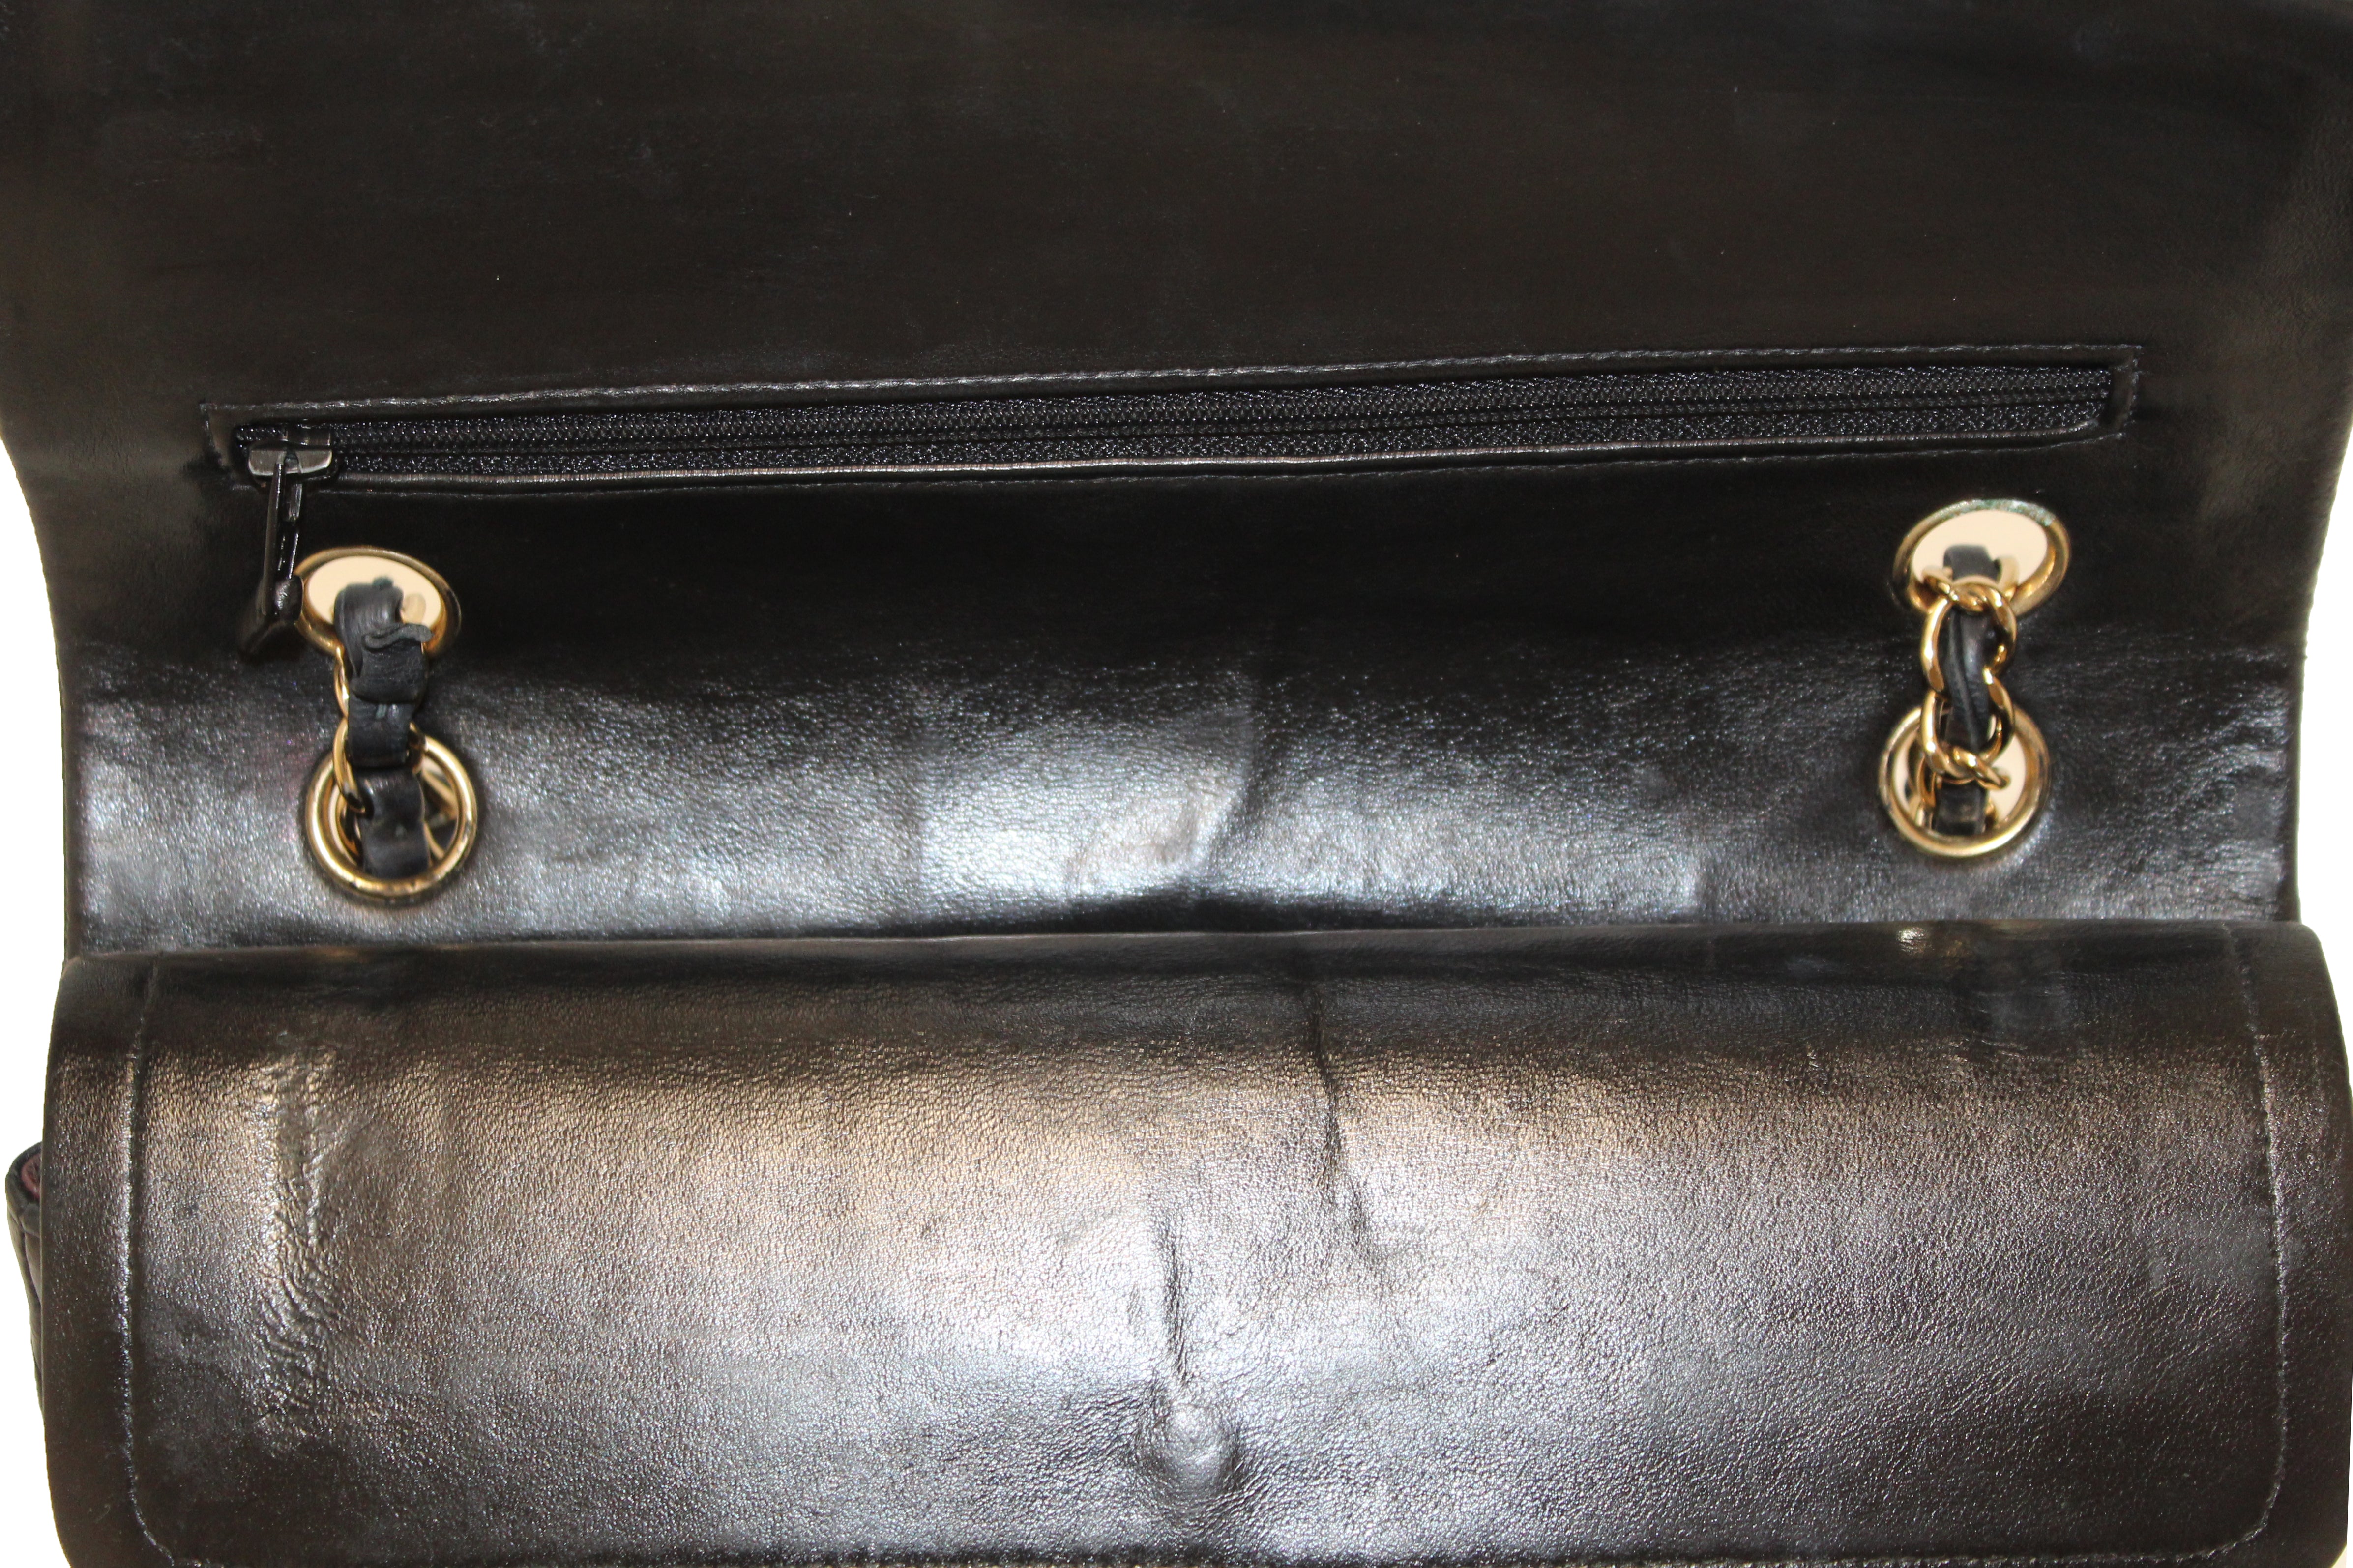 Chanel Black Quilted Lambskin Double Sided Classic Flap Medium  Q6B0N91IK0020